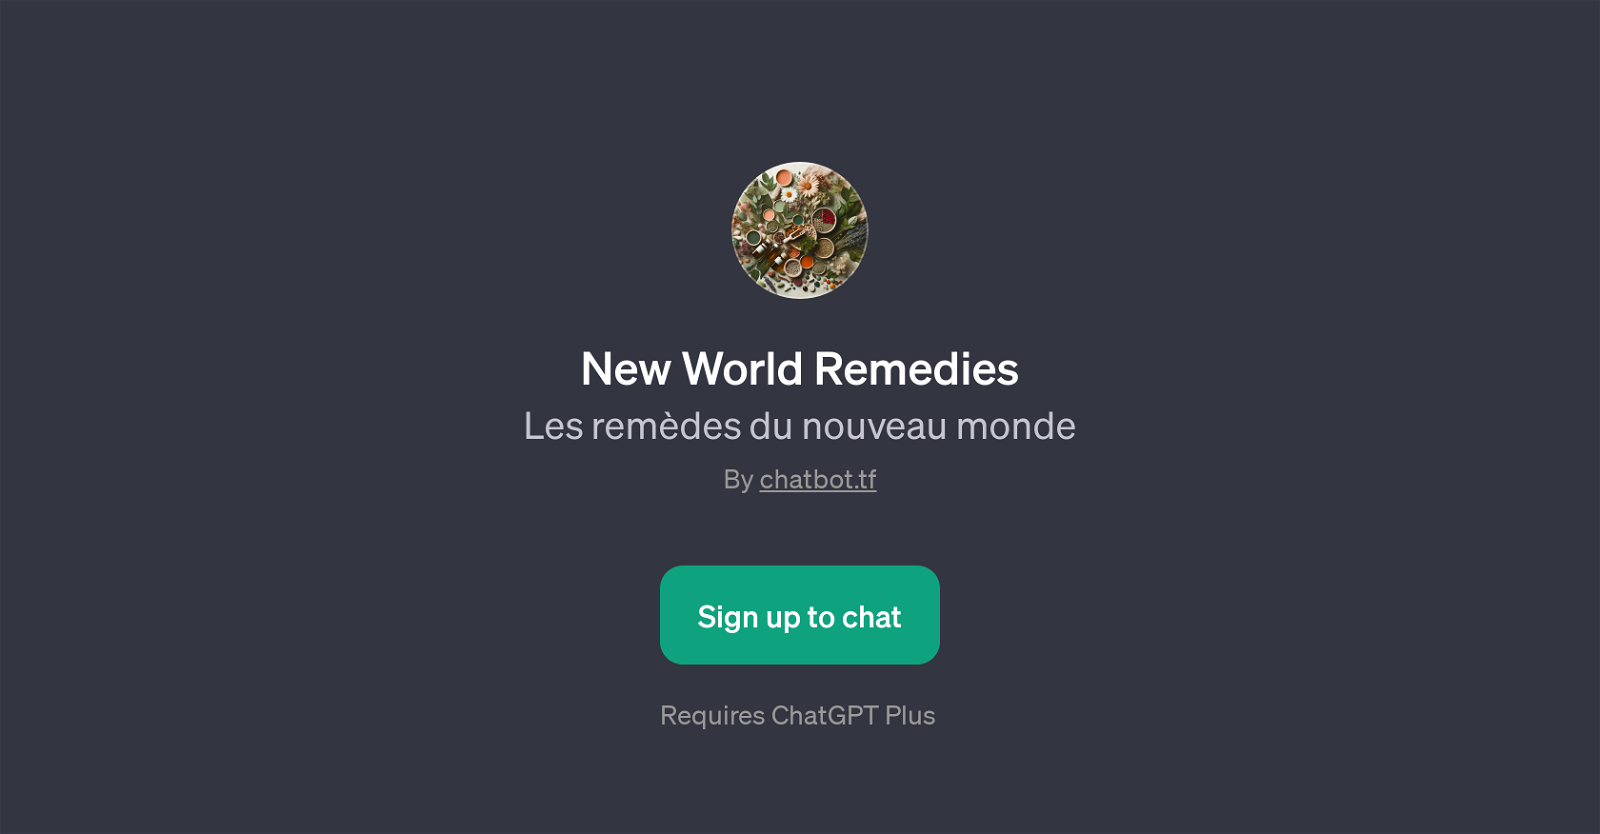 New World Remedies website